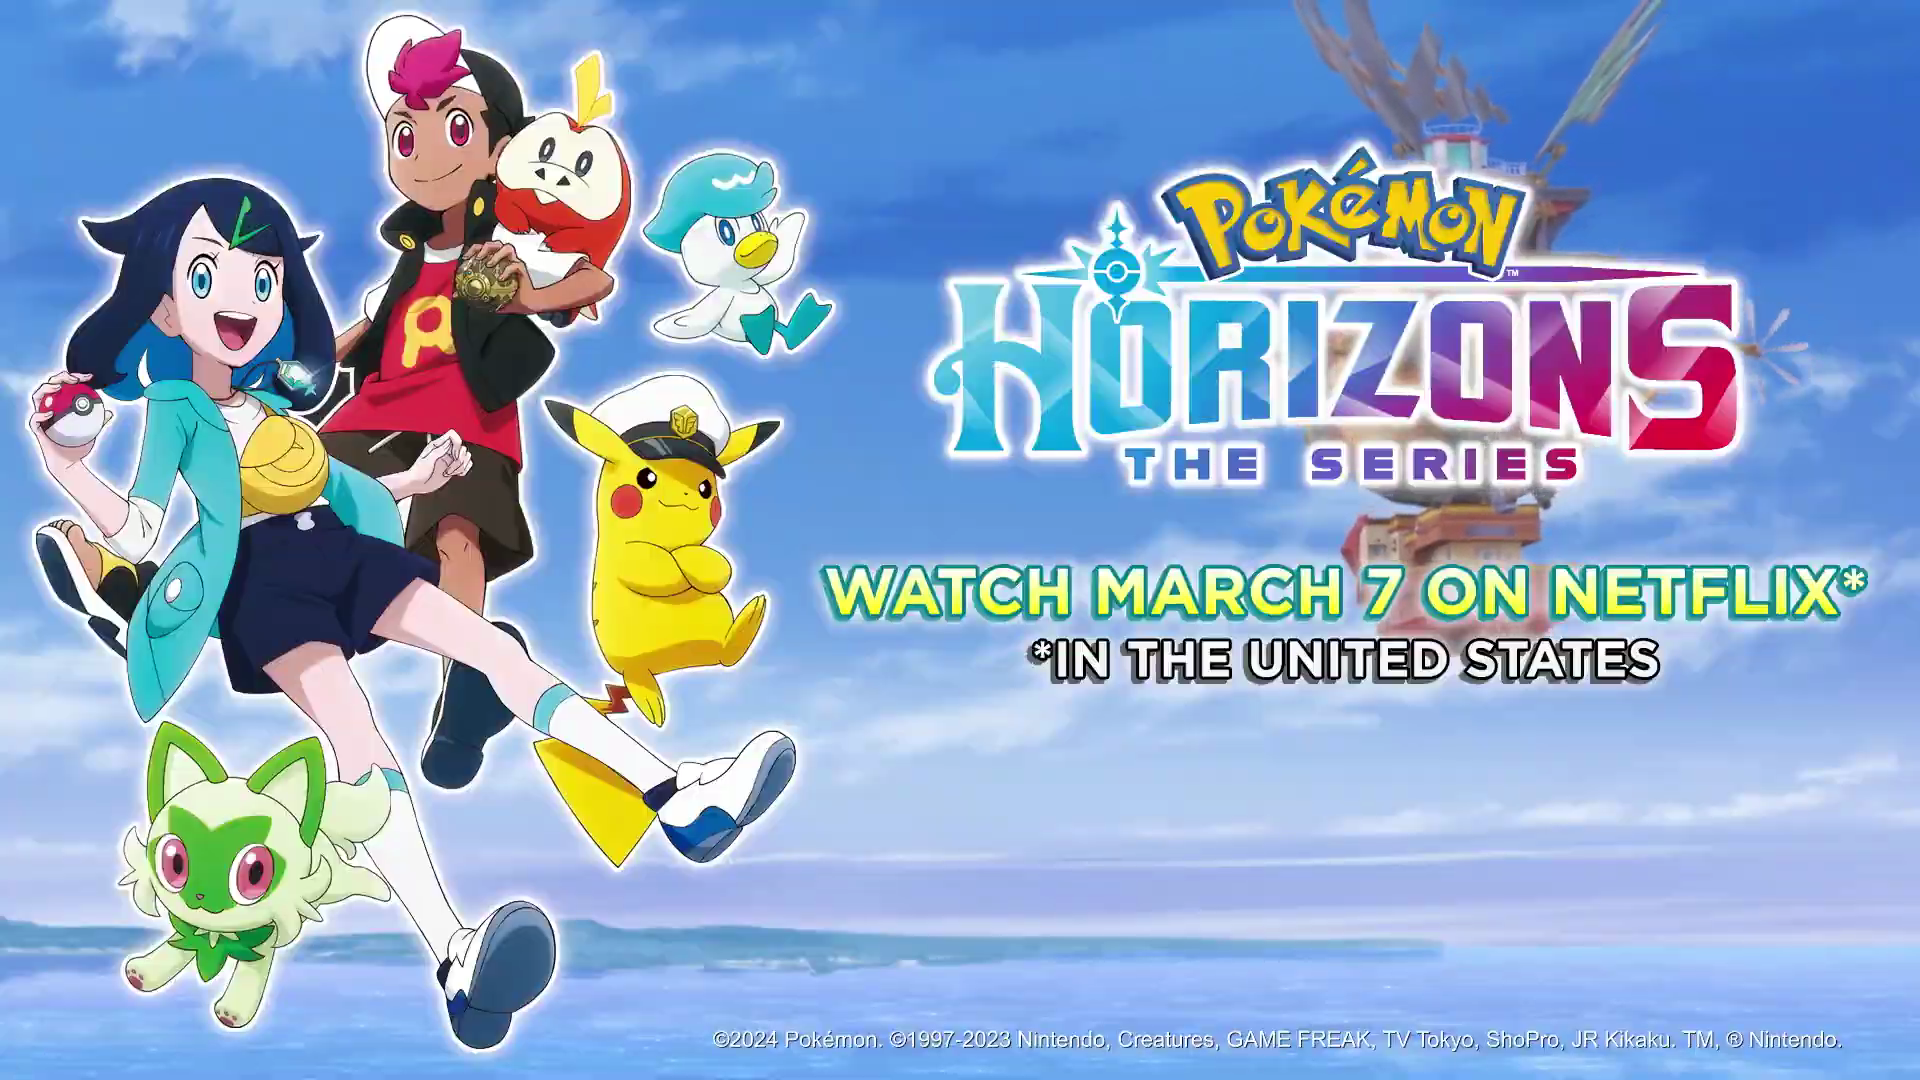 Pokémon GO and Pokémon Horizons: The Series | Image: The Pokémon Company